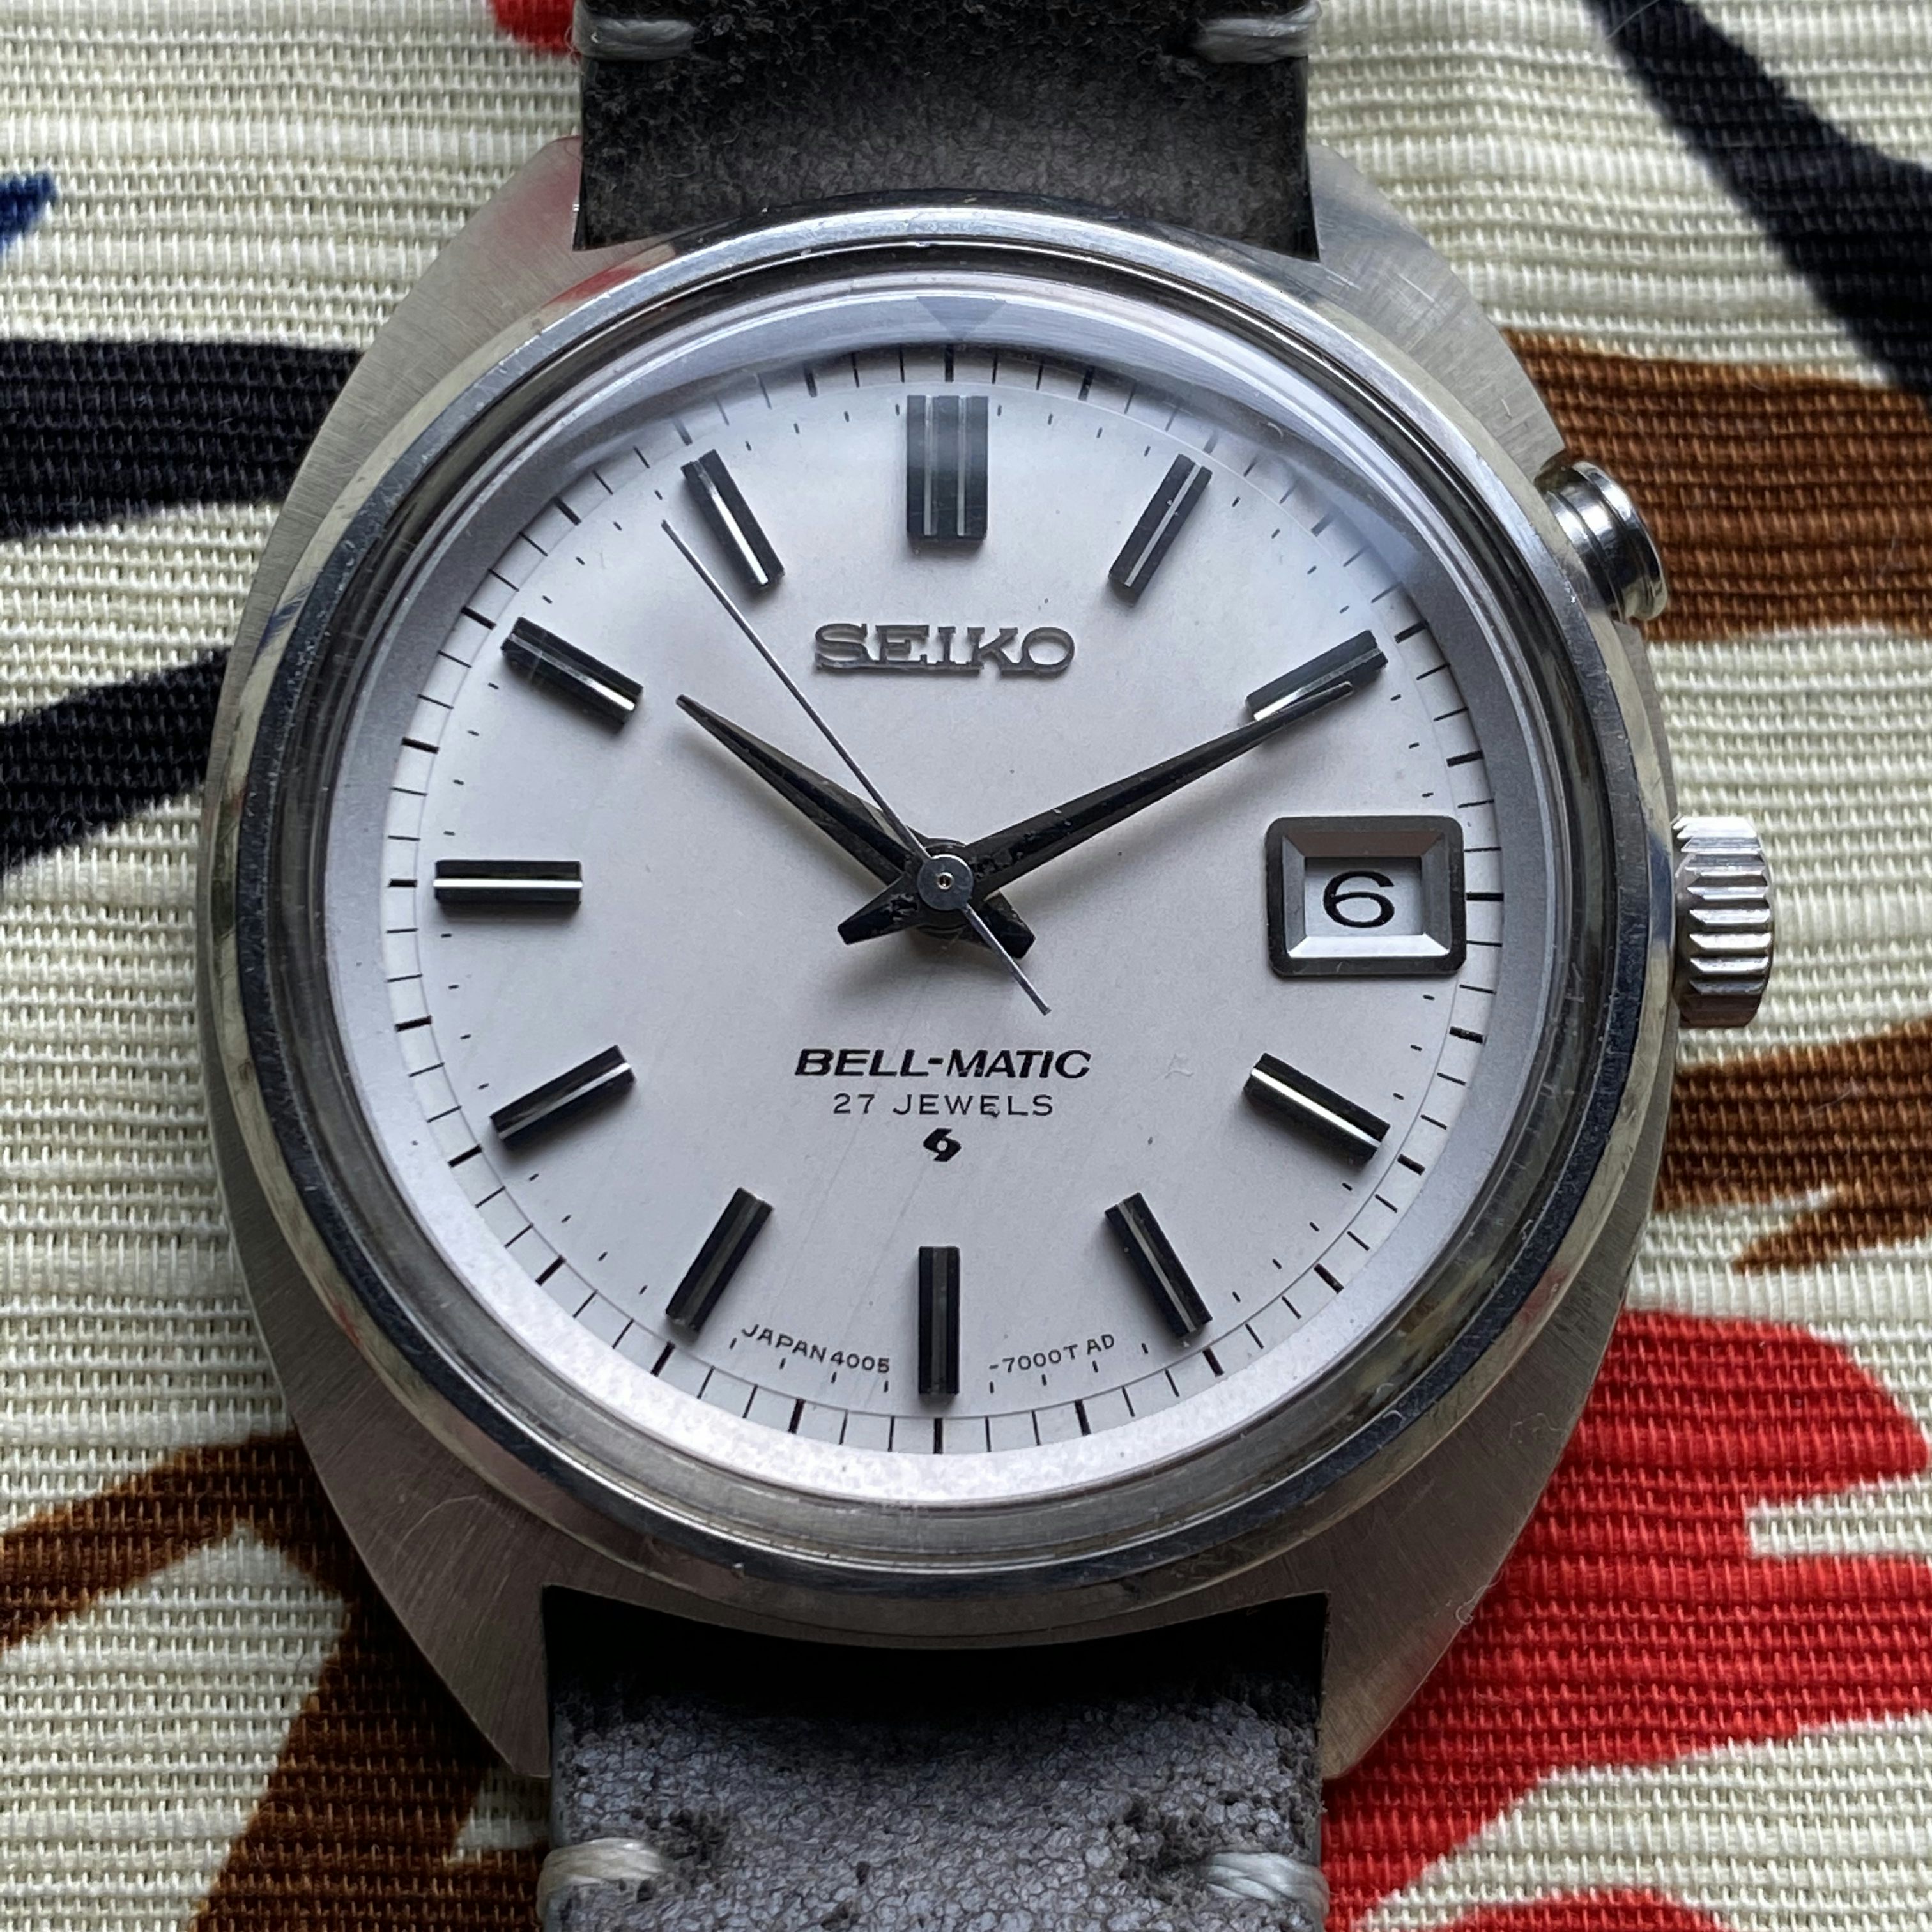 1968 Seiko Bell-Matic 4005-7000 — Hodinkee Community